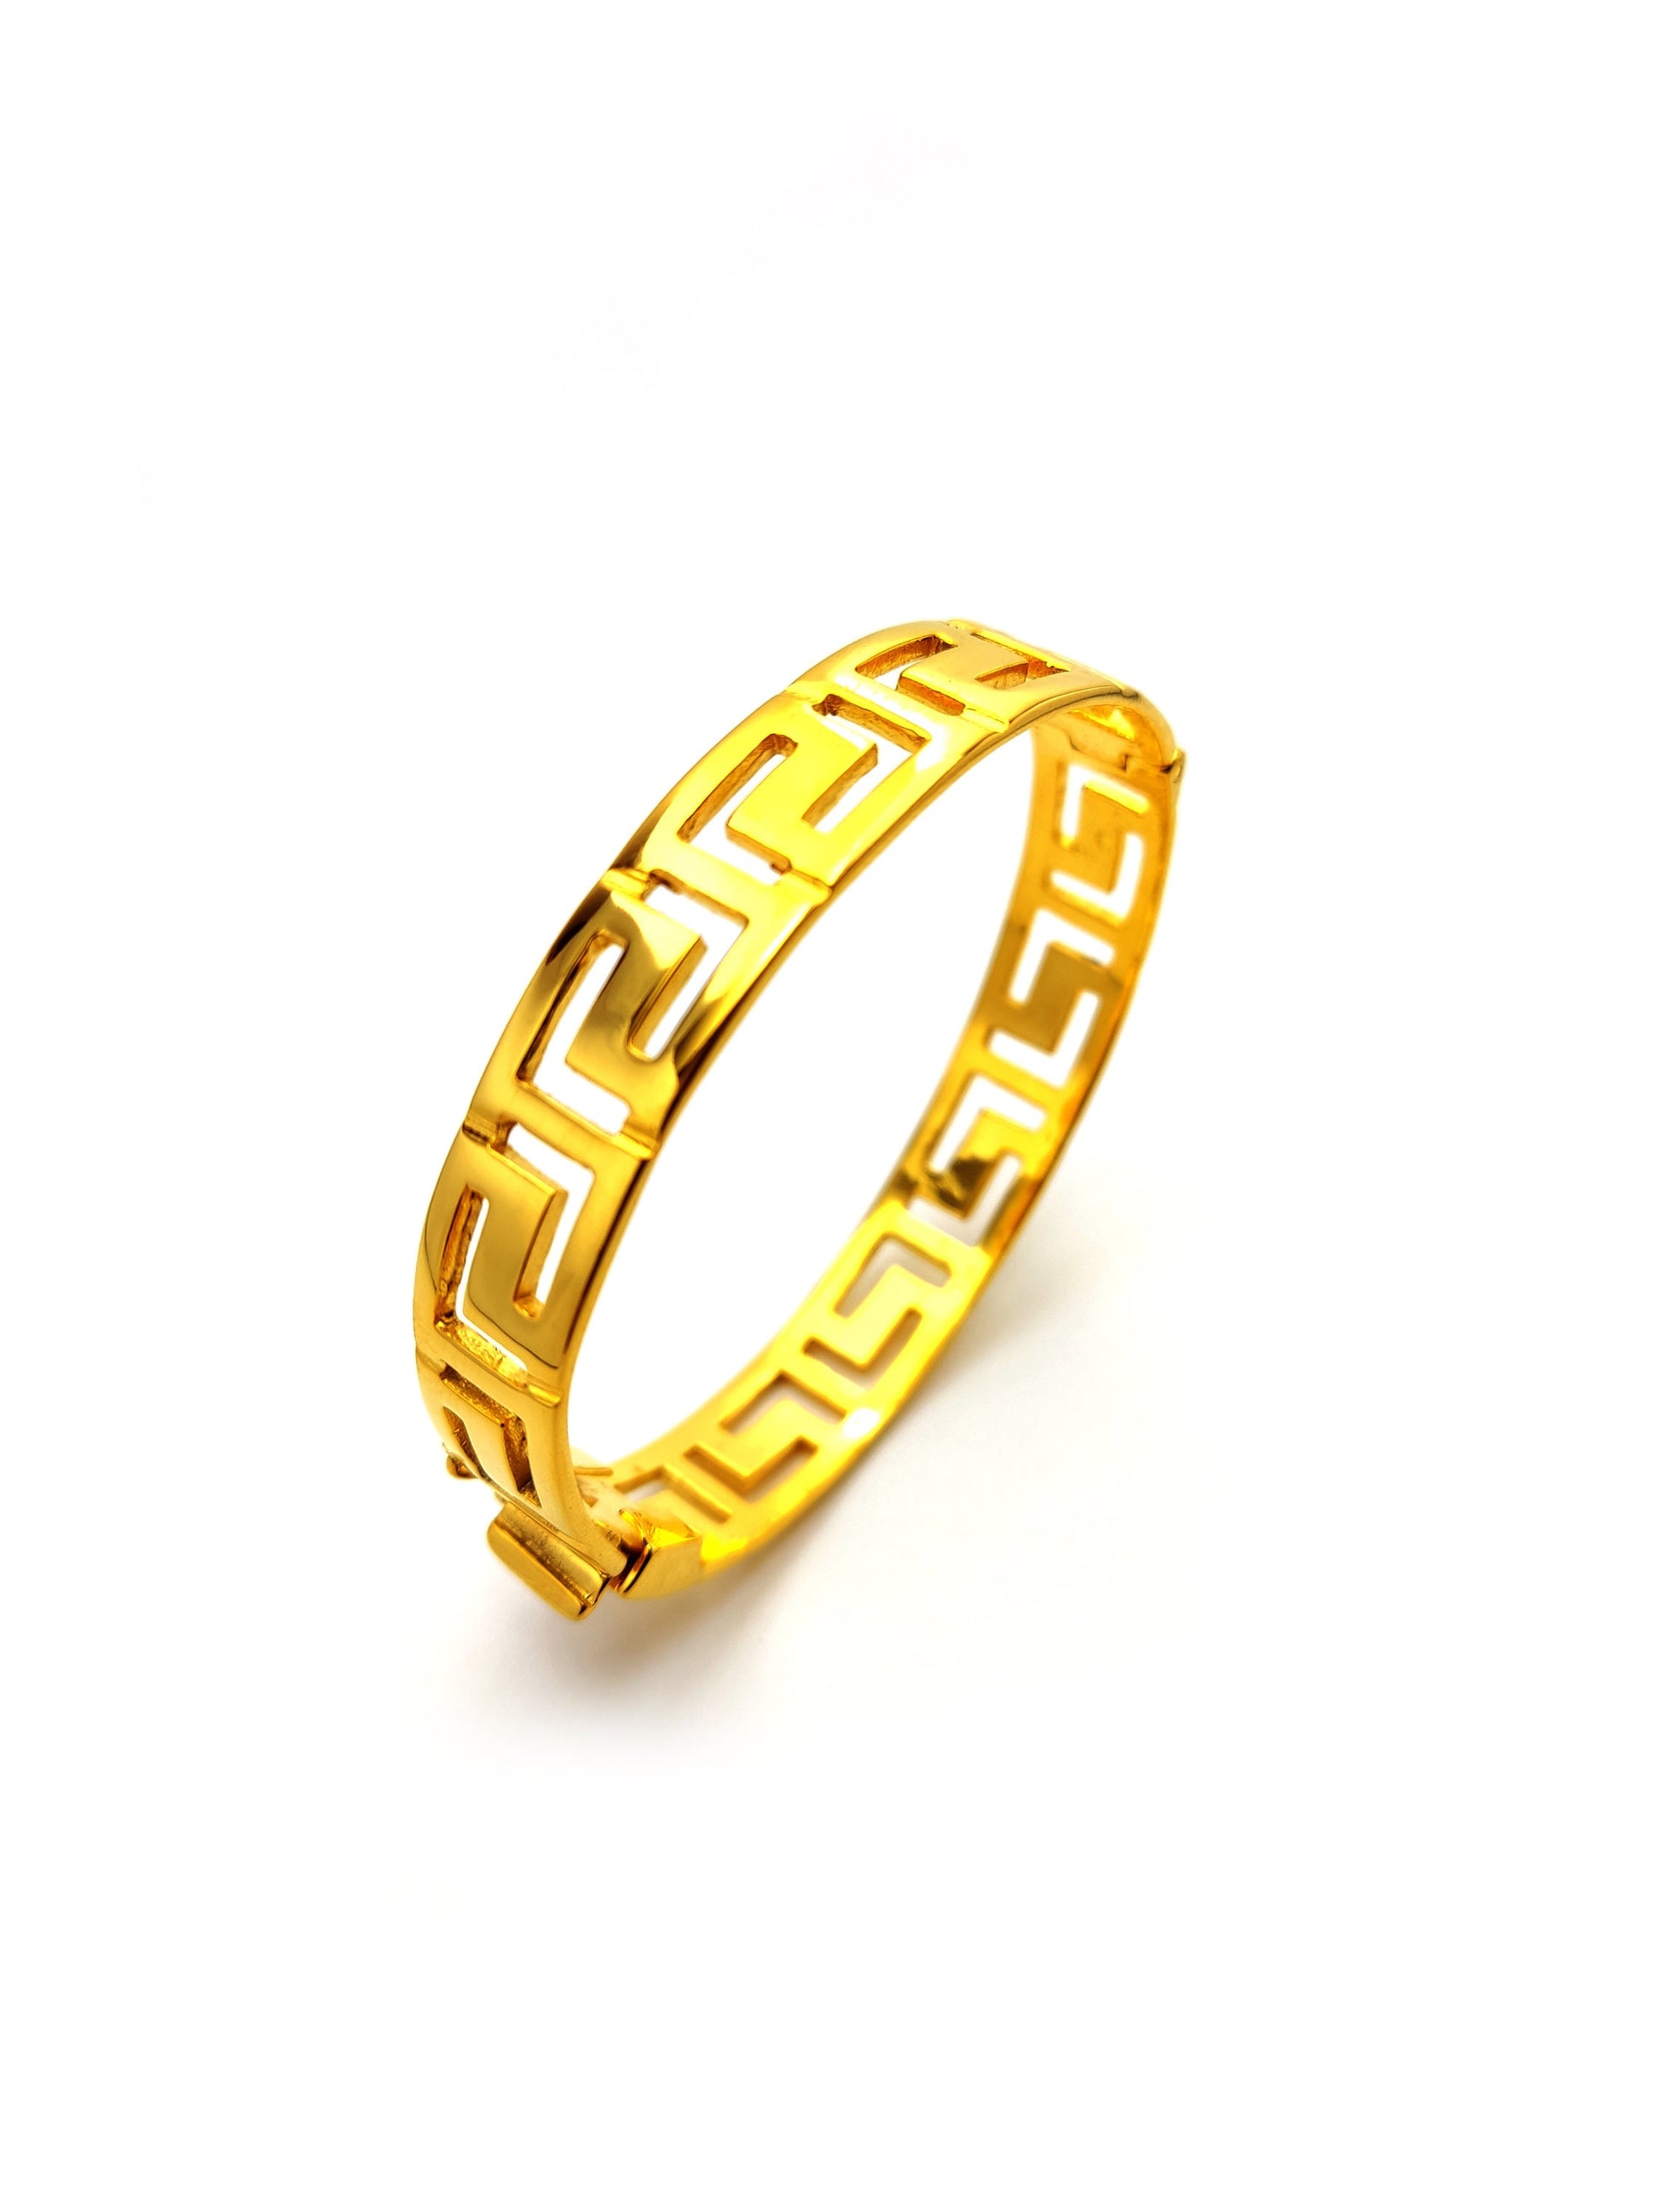 22K Gold Cuff for Men - Bracelet